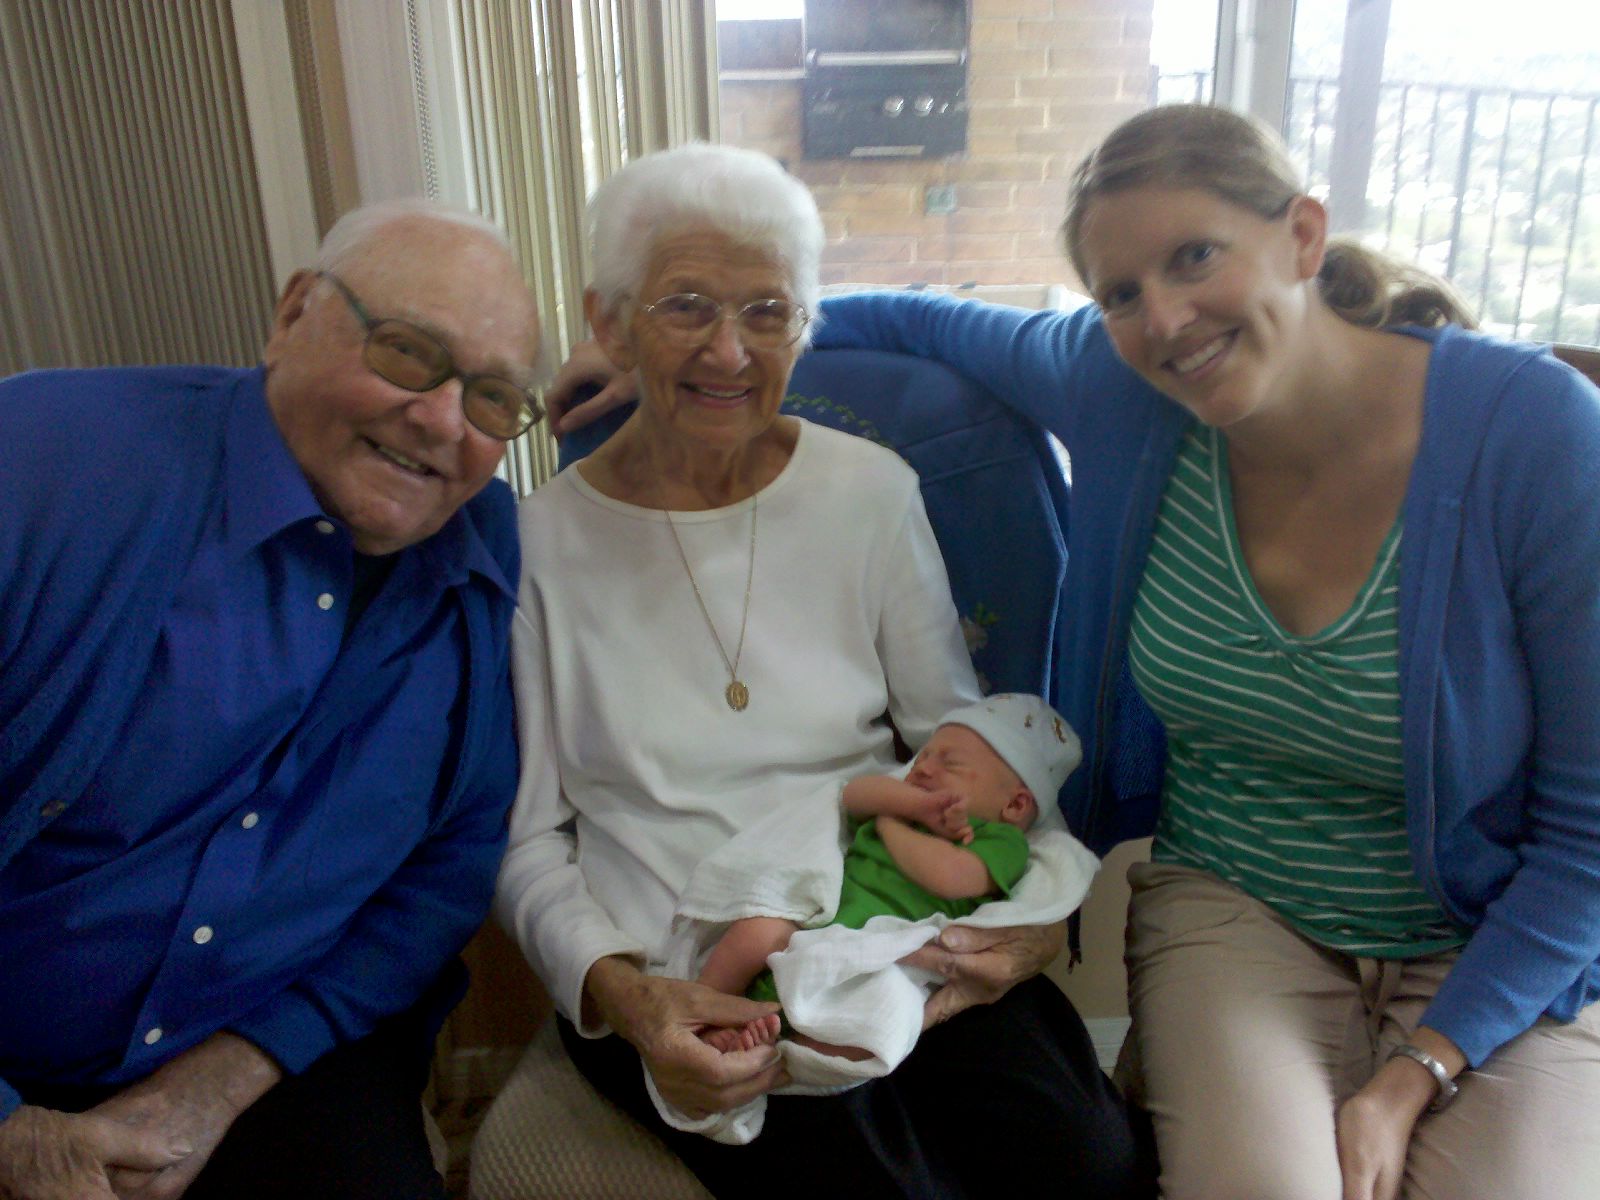 Sean Gardinier's MoBlog: Knox, Meet Your Great Grandparents!